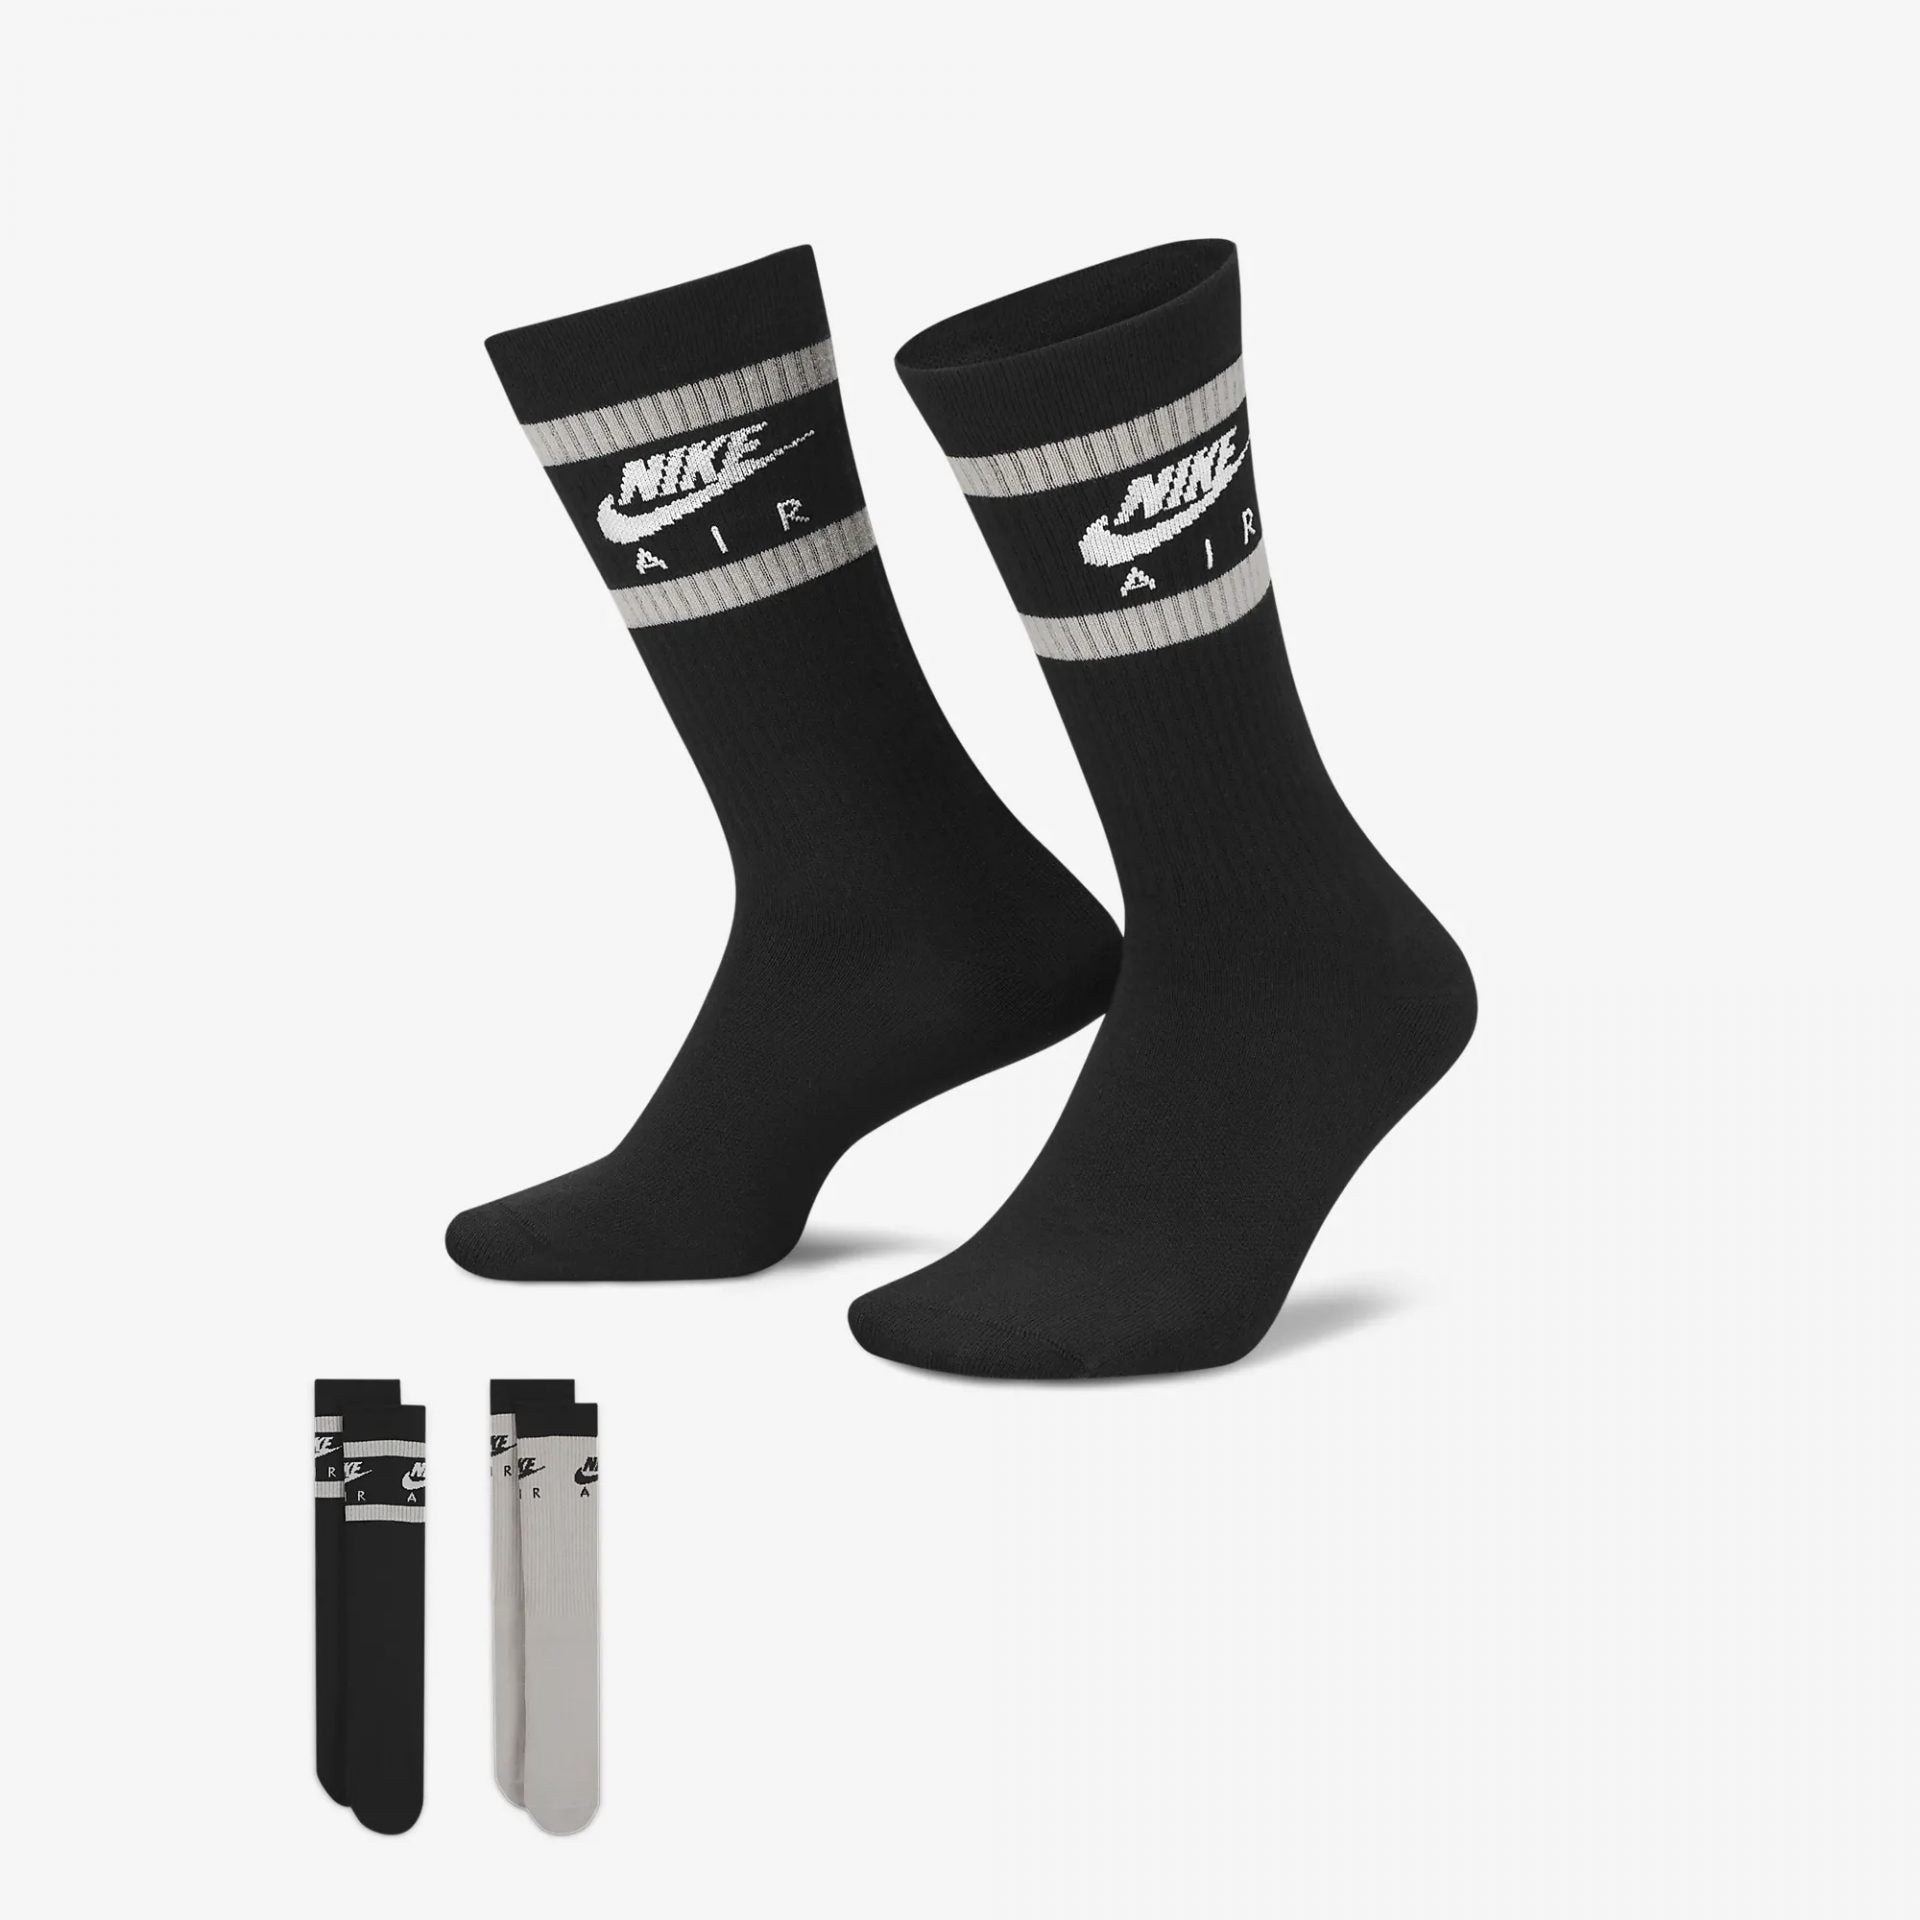 Meia Nike Sportswear Everyday Essential (3 Pares) White - So High